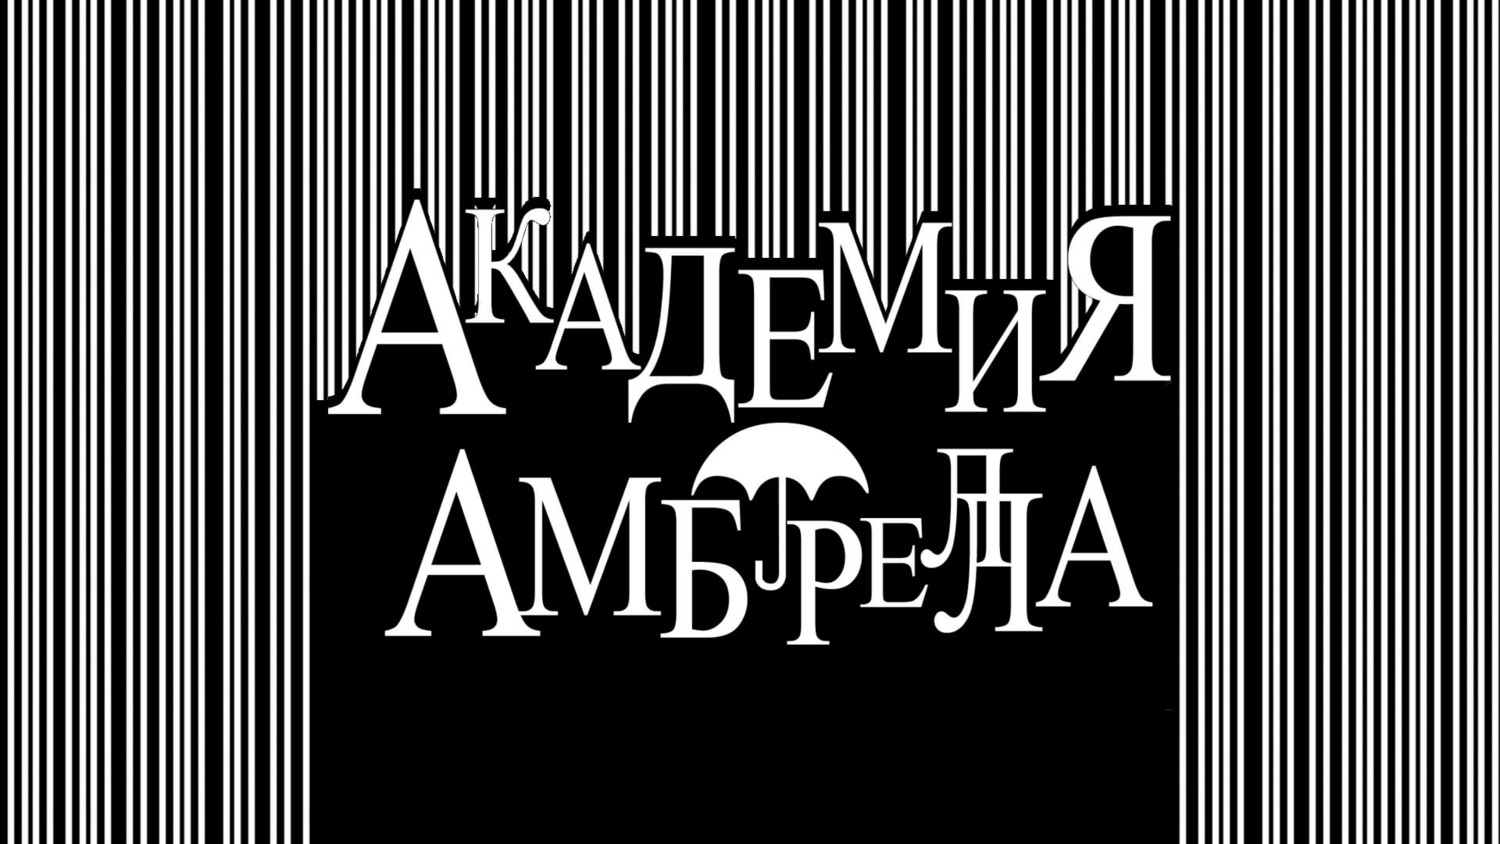 Академия «Амбрелла» 2 сезон 3 серия «Шведская работа» (сериал, 2019)